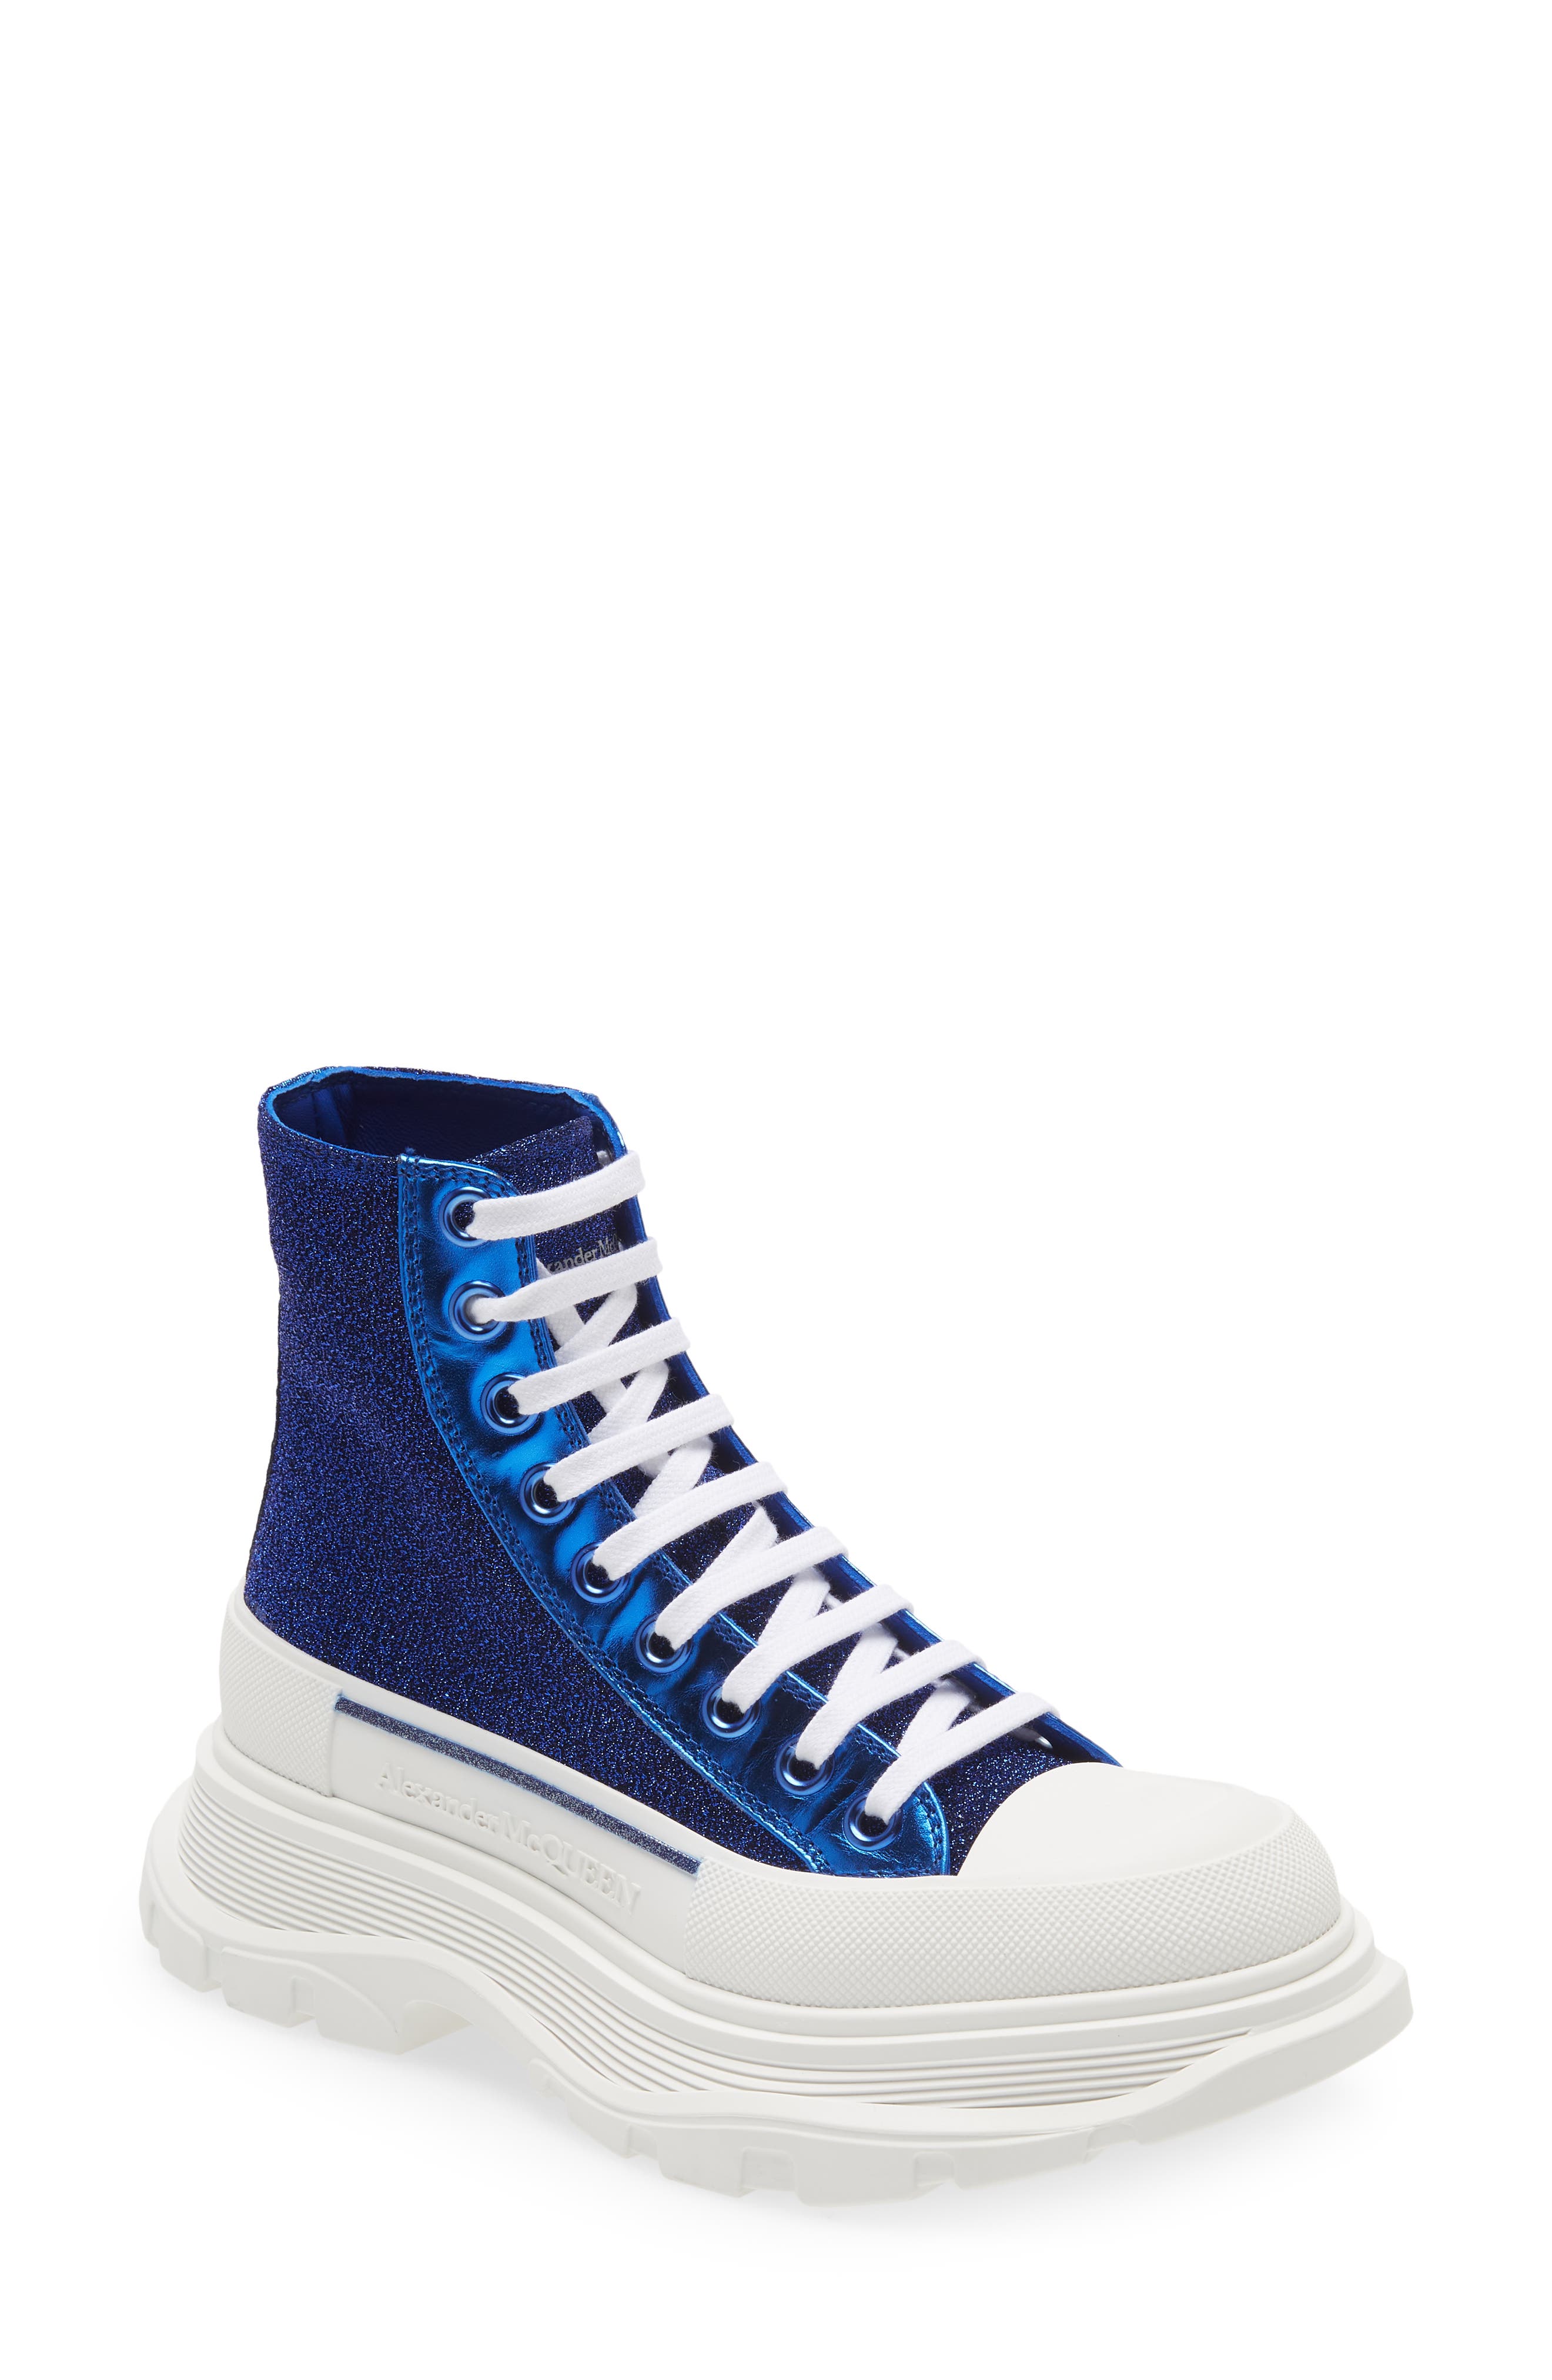 Alexander McQueen Tread Slick Glitter High Top Sneaker in Navy/Blue/White at Nordstrom, Size 8.5Us